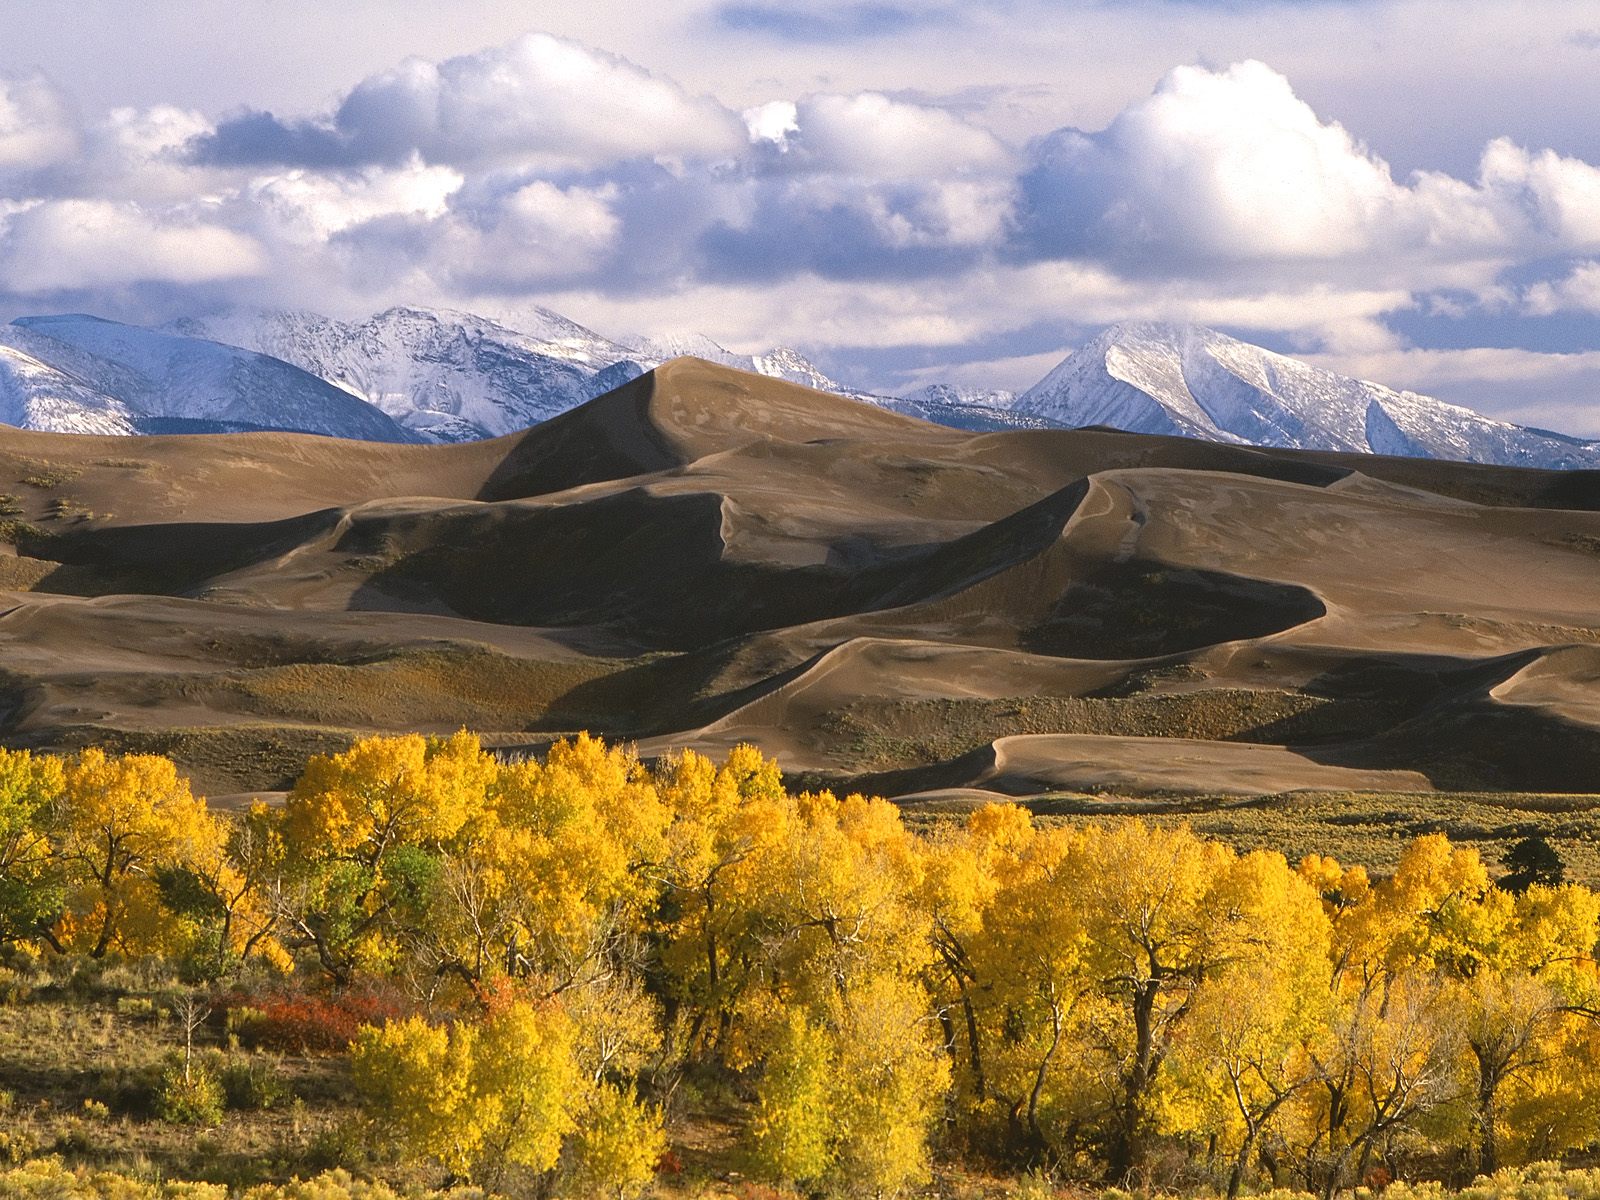 Dunes and Fall Color Colorado 1600 x 1200